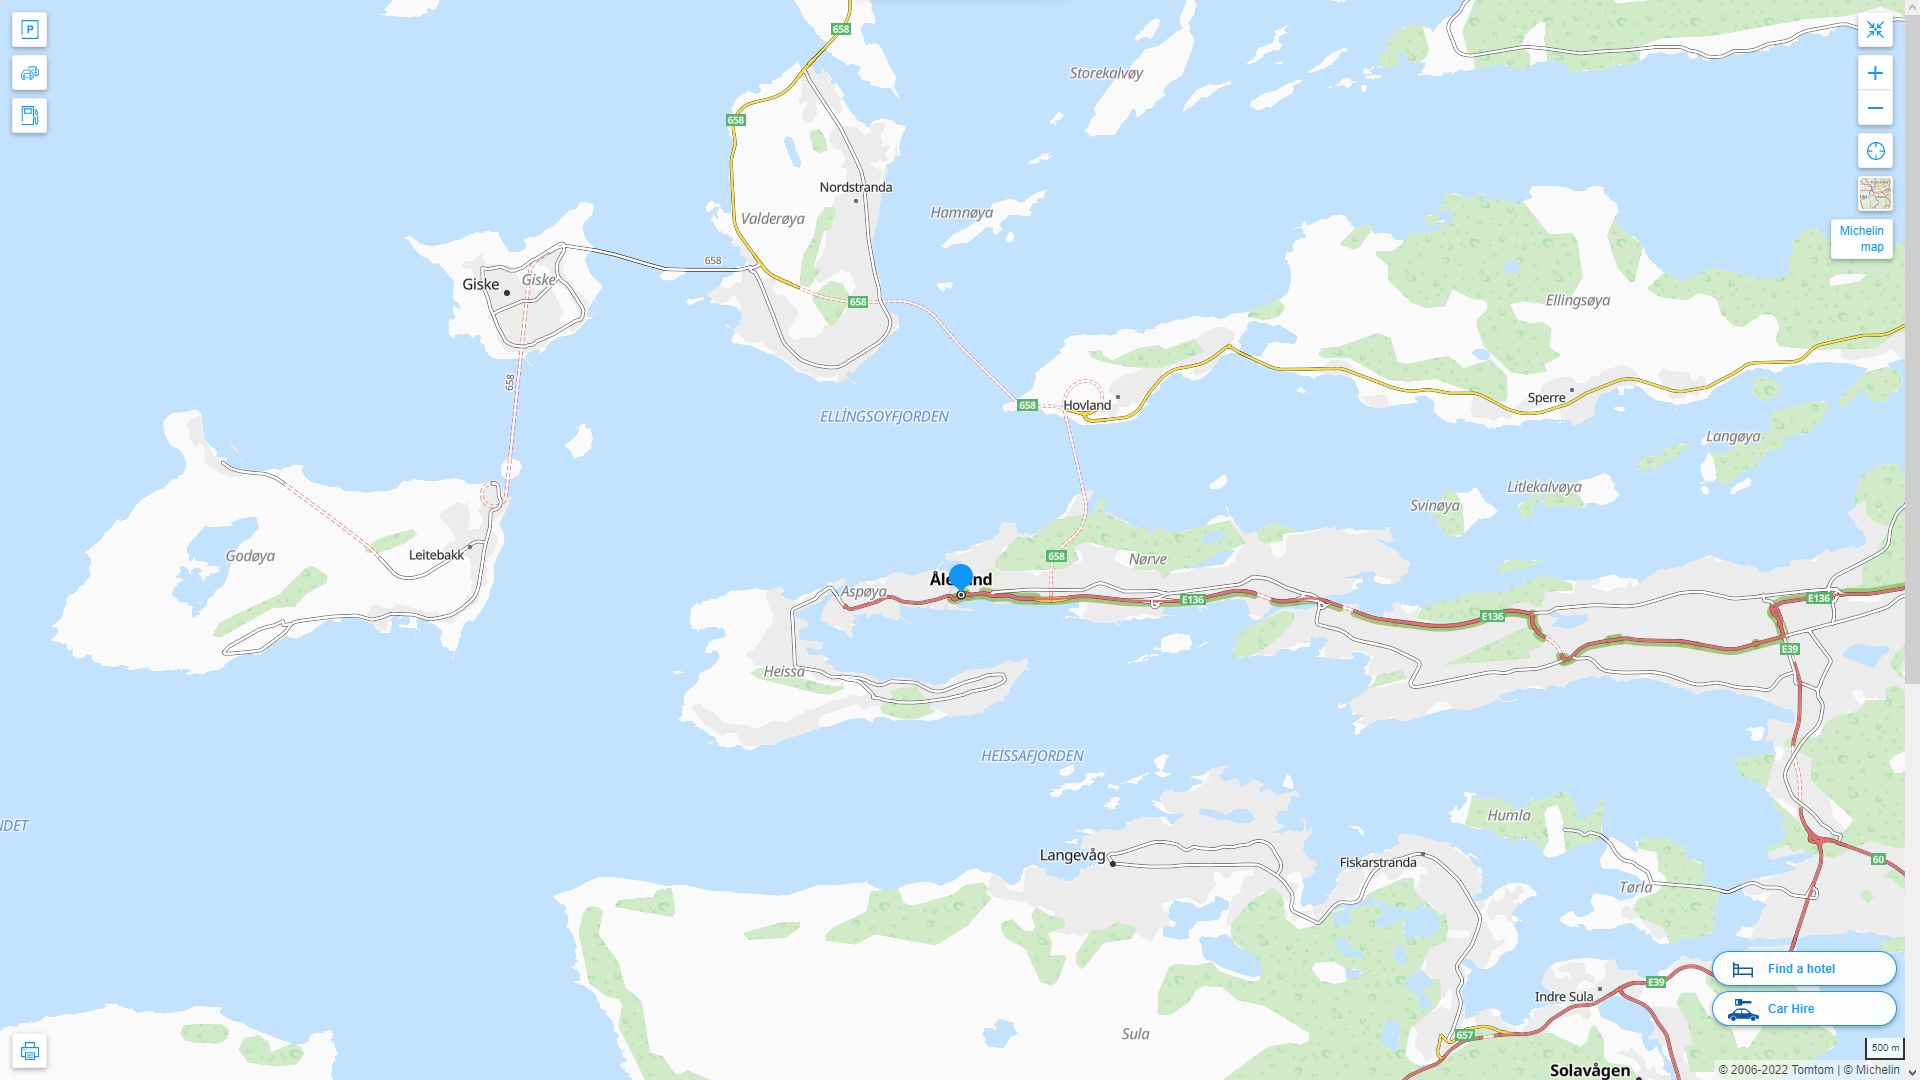 Alesund Norvege Autoroute et carte routiere